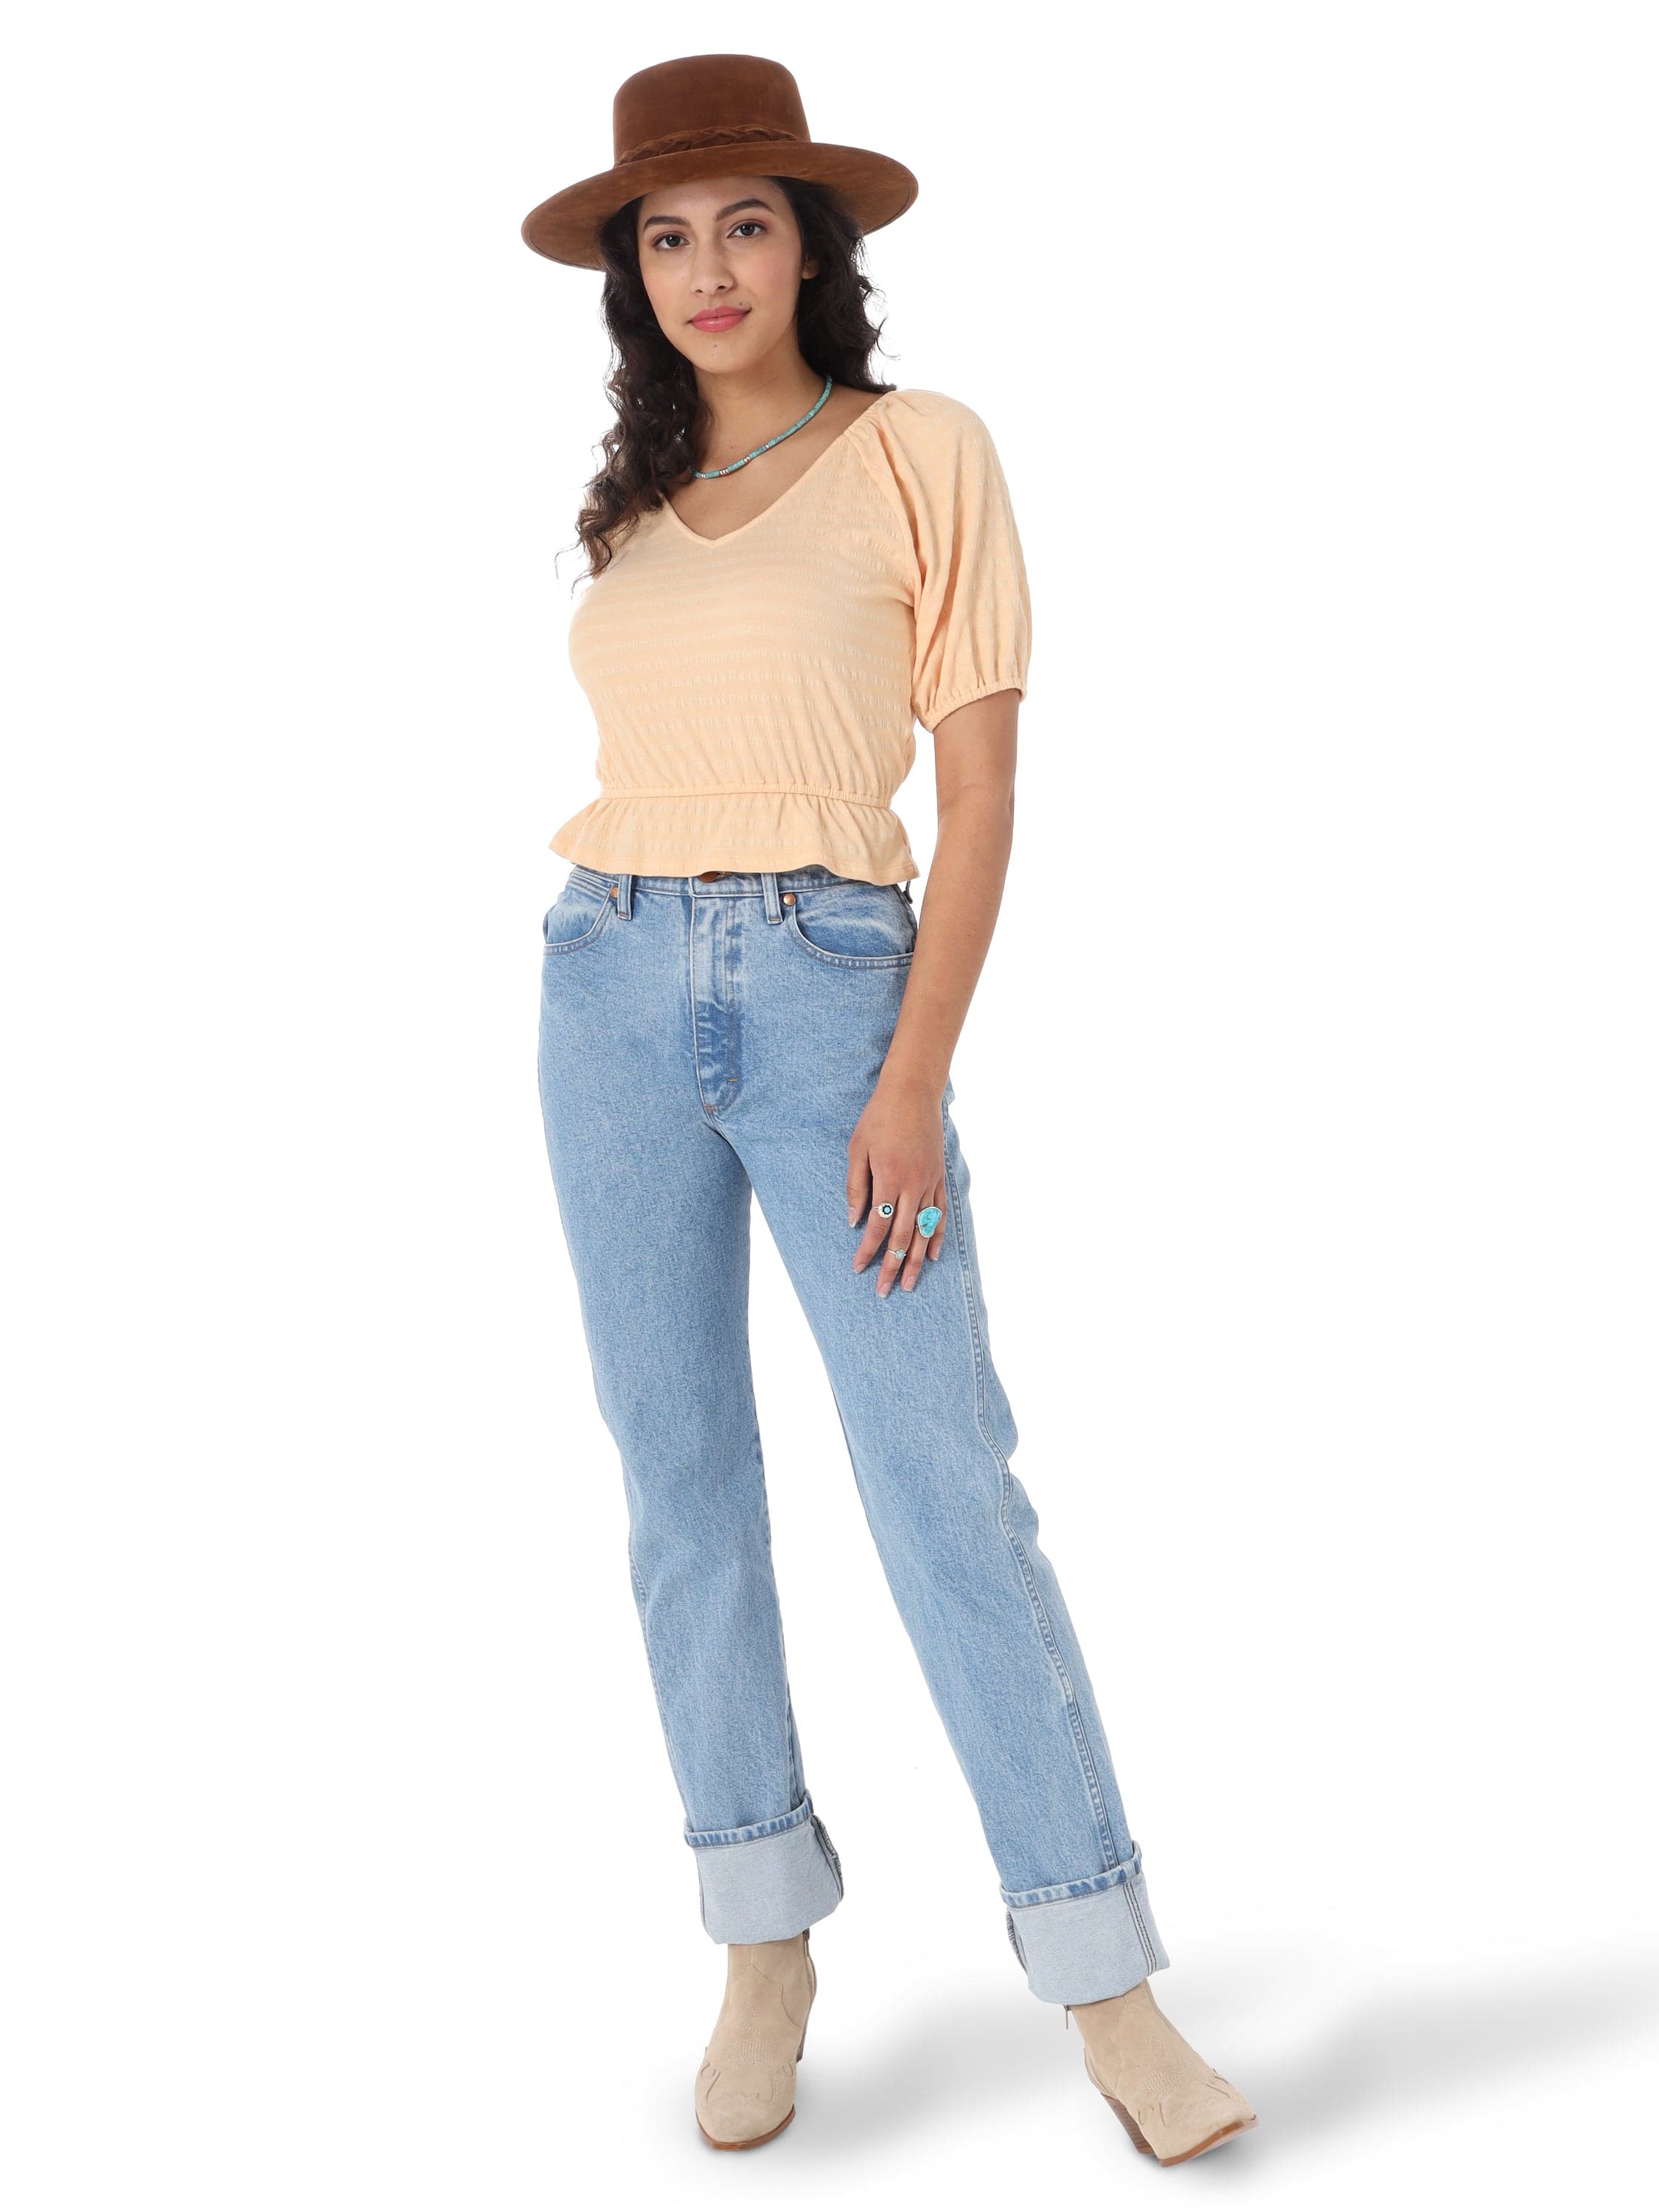 Wrangler Women's Cowboy Cut Slim Fit High Rise Stretch Jean